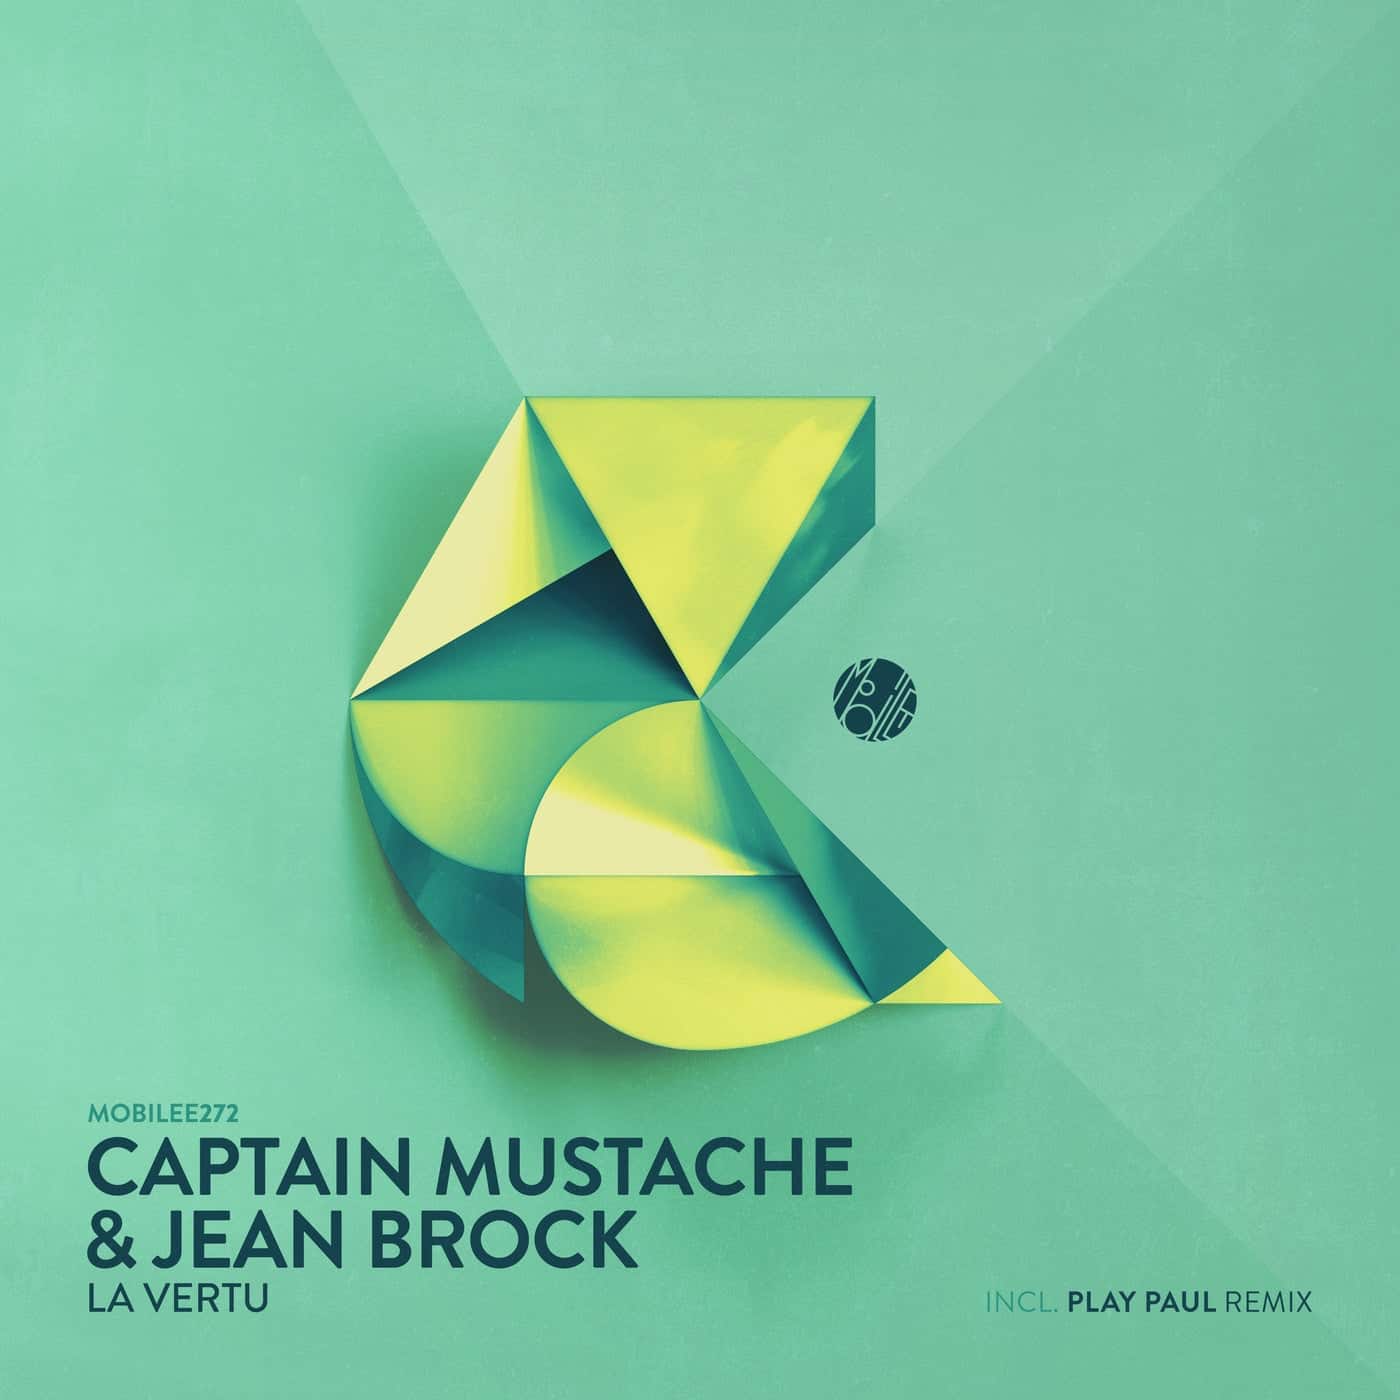 image cover: Captain Mustache, Jean Brock - La Vertu / MOBILEE272BP